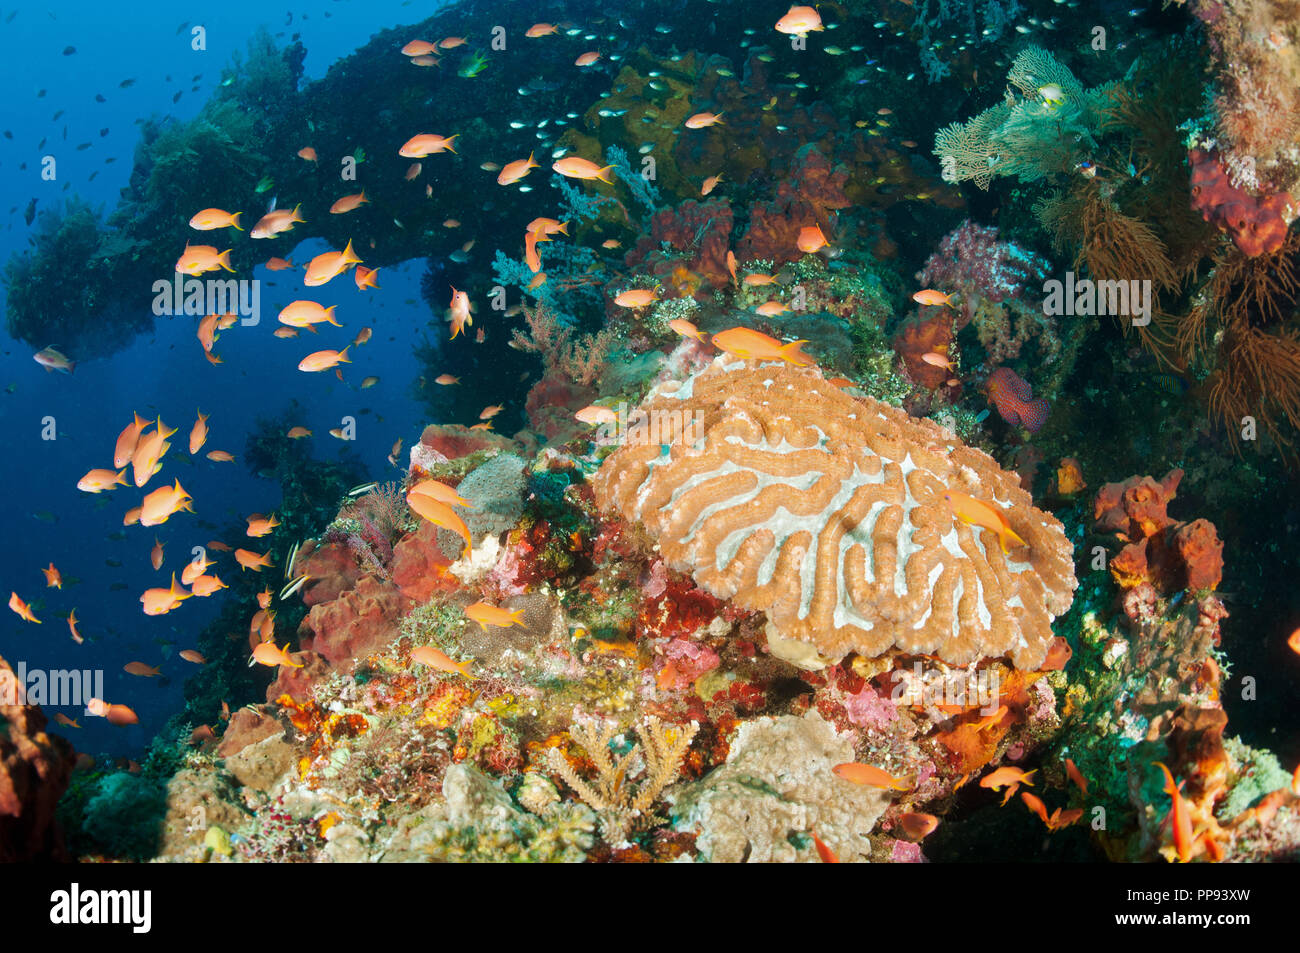 Coral and fish life on Liberty Wreck, Tulamben Bali Indonesia. Stock Photo